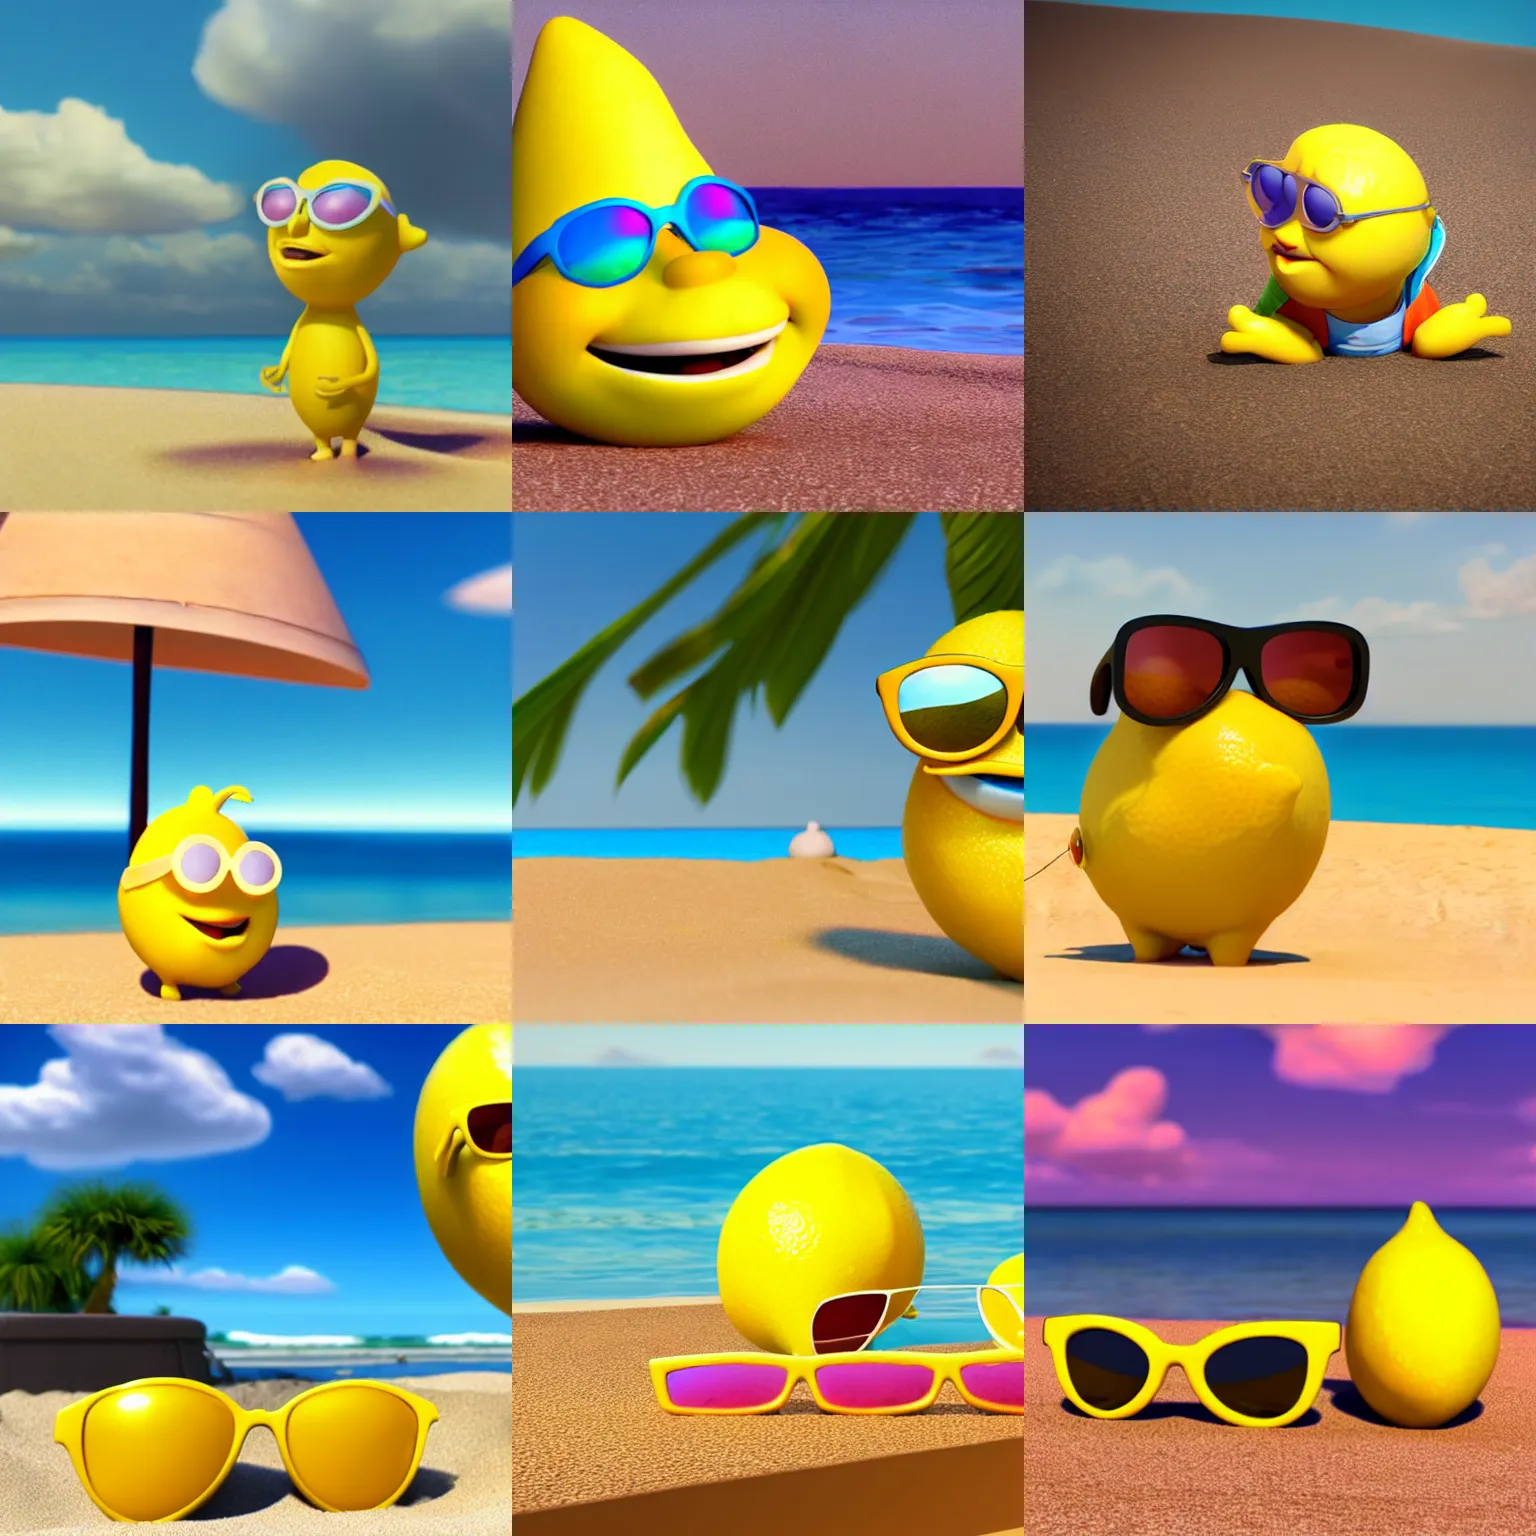 Prompt: 3D Render, Disney Pixar Movie Still, lemon character relaxing on a beach wearing sunglasses